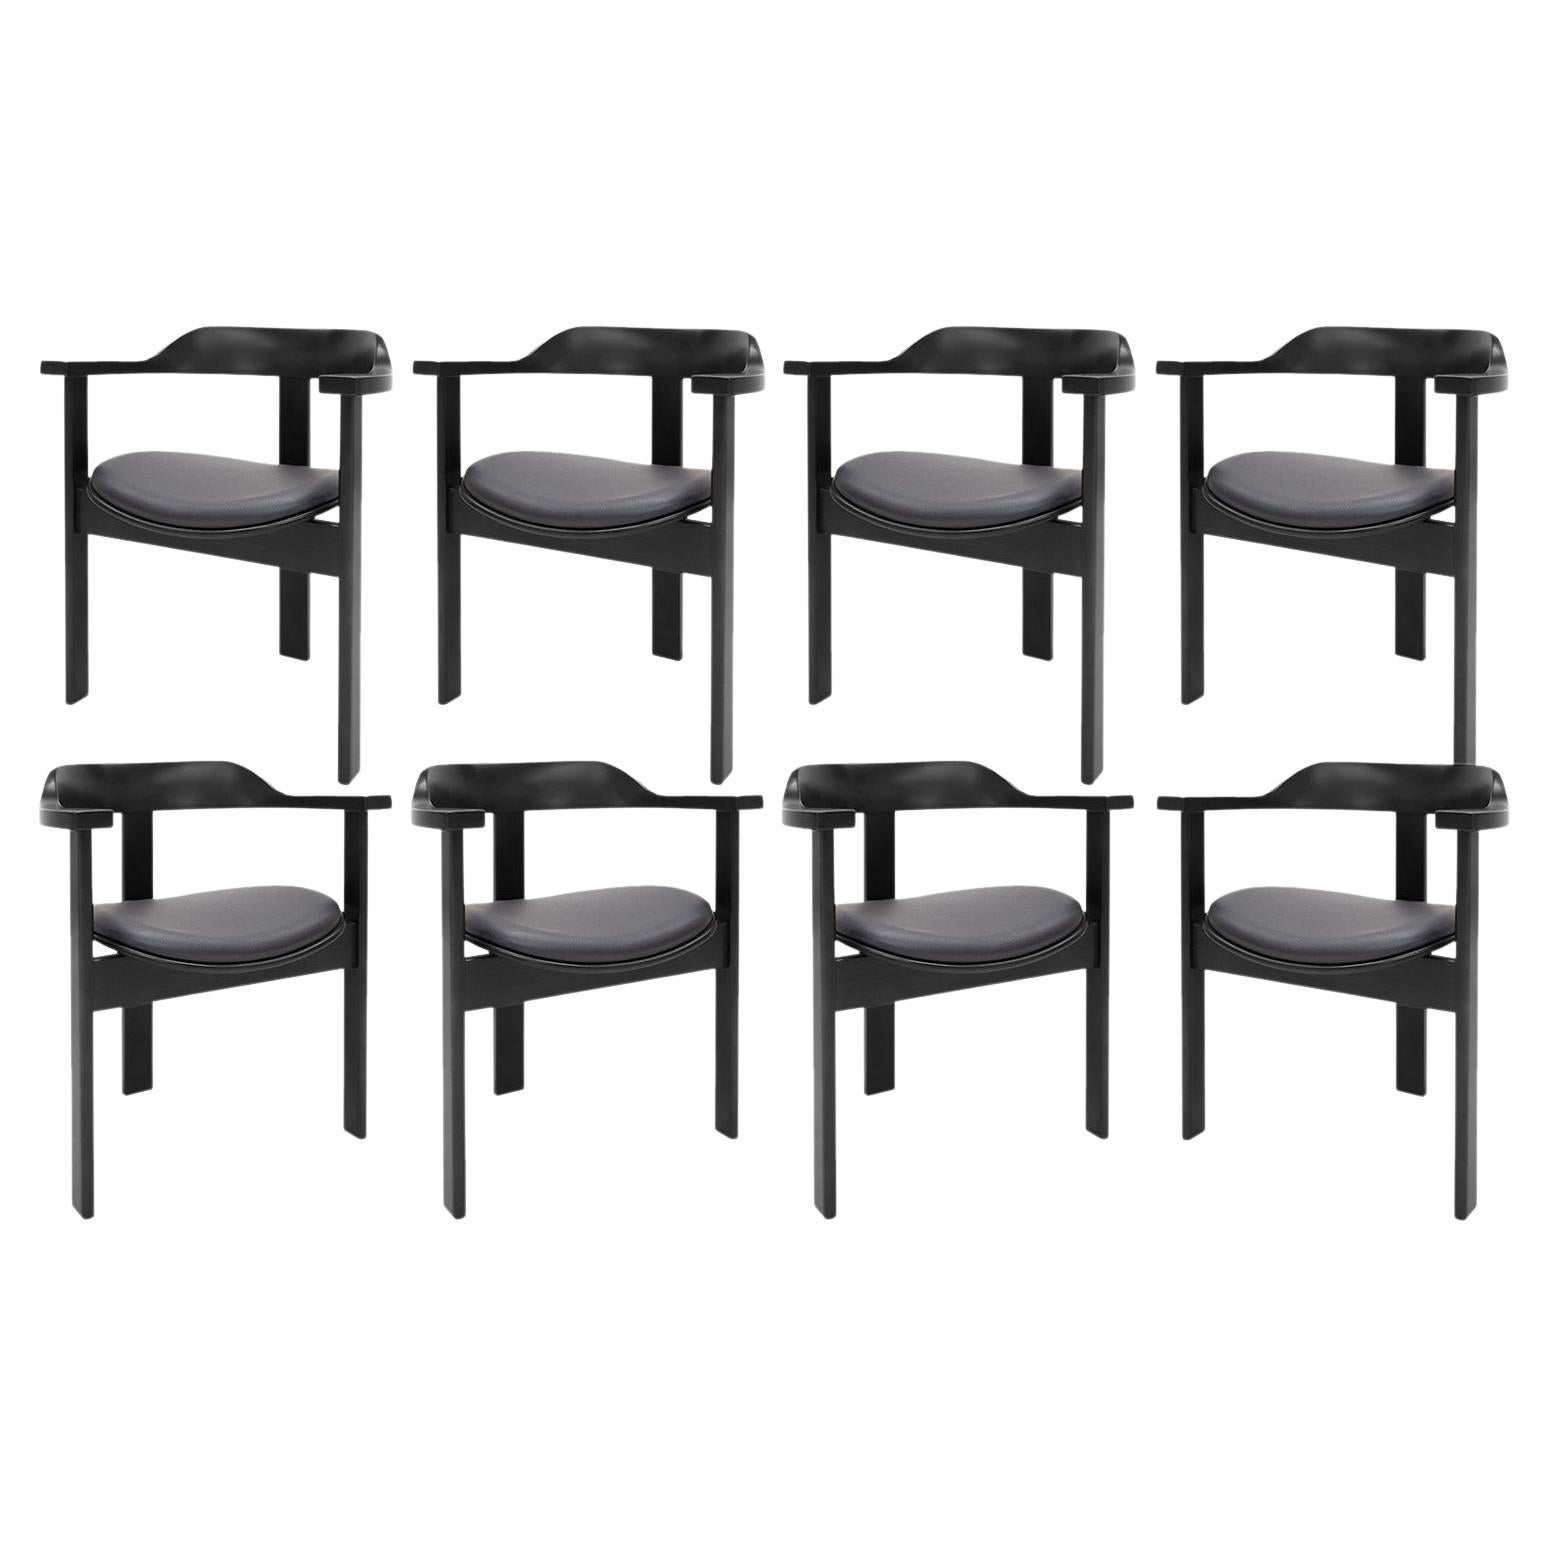 8 chaises Haussmann noires du milieu du siècle dernier, Robert & Trix Haussmann, Design 1964